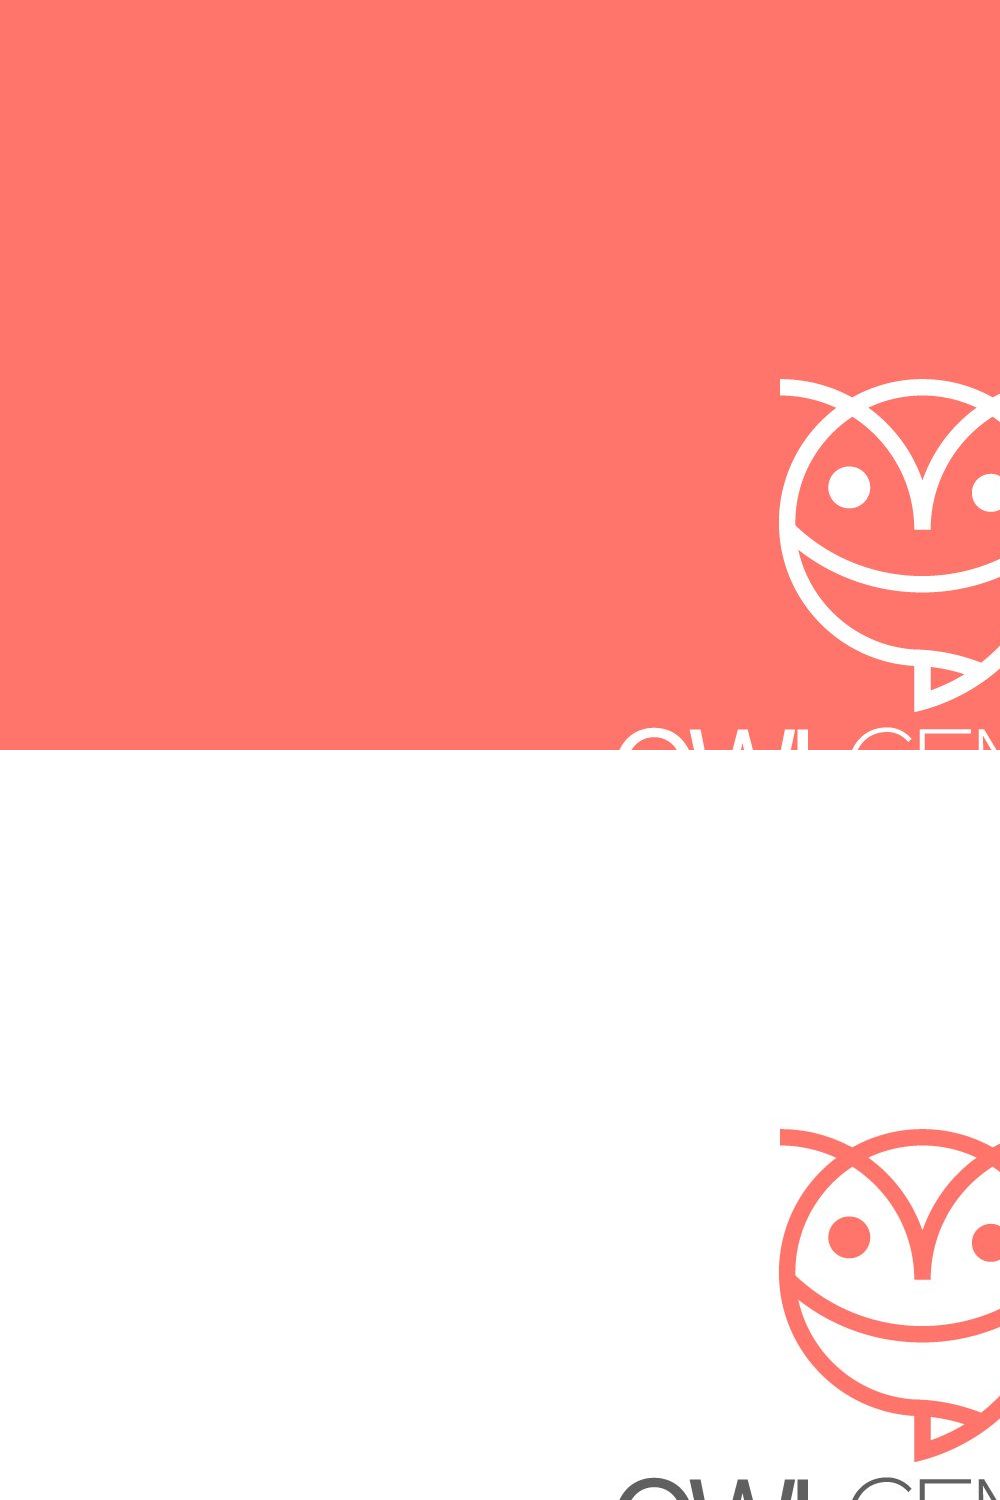 Owl logo pinterest preview image.